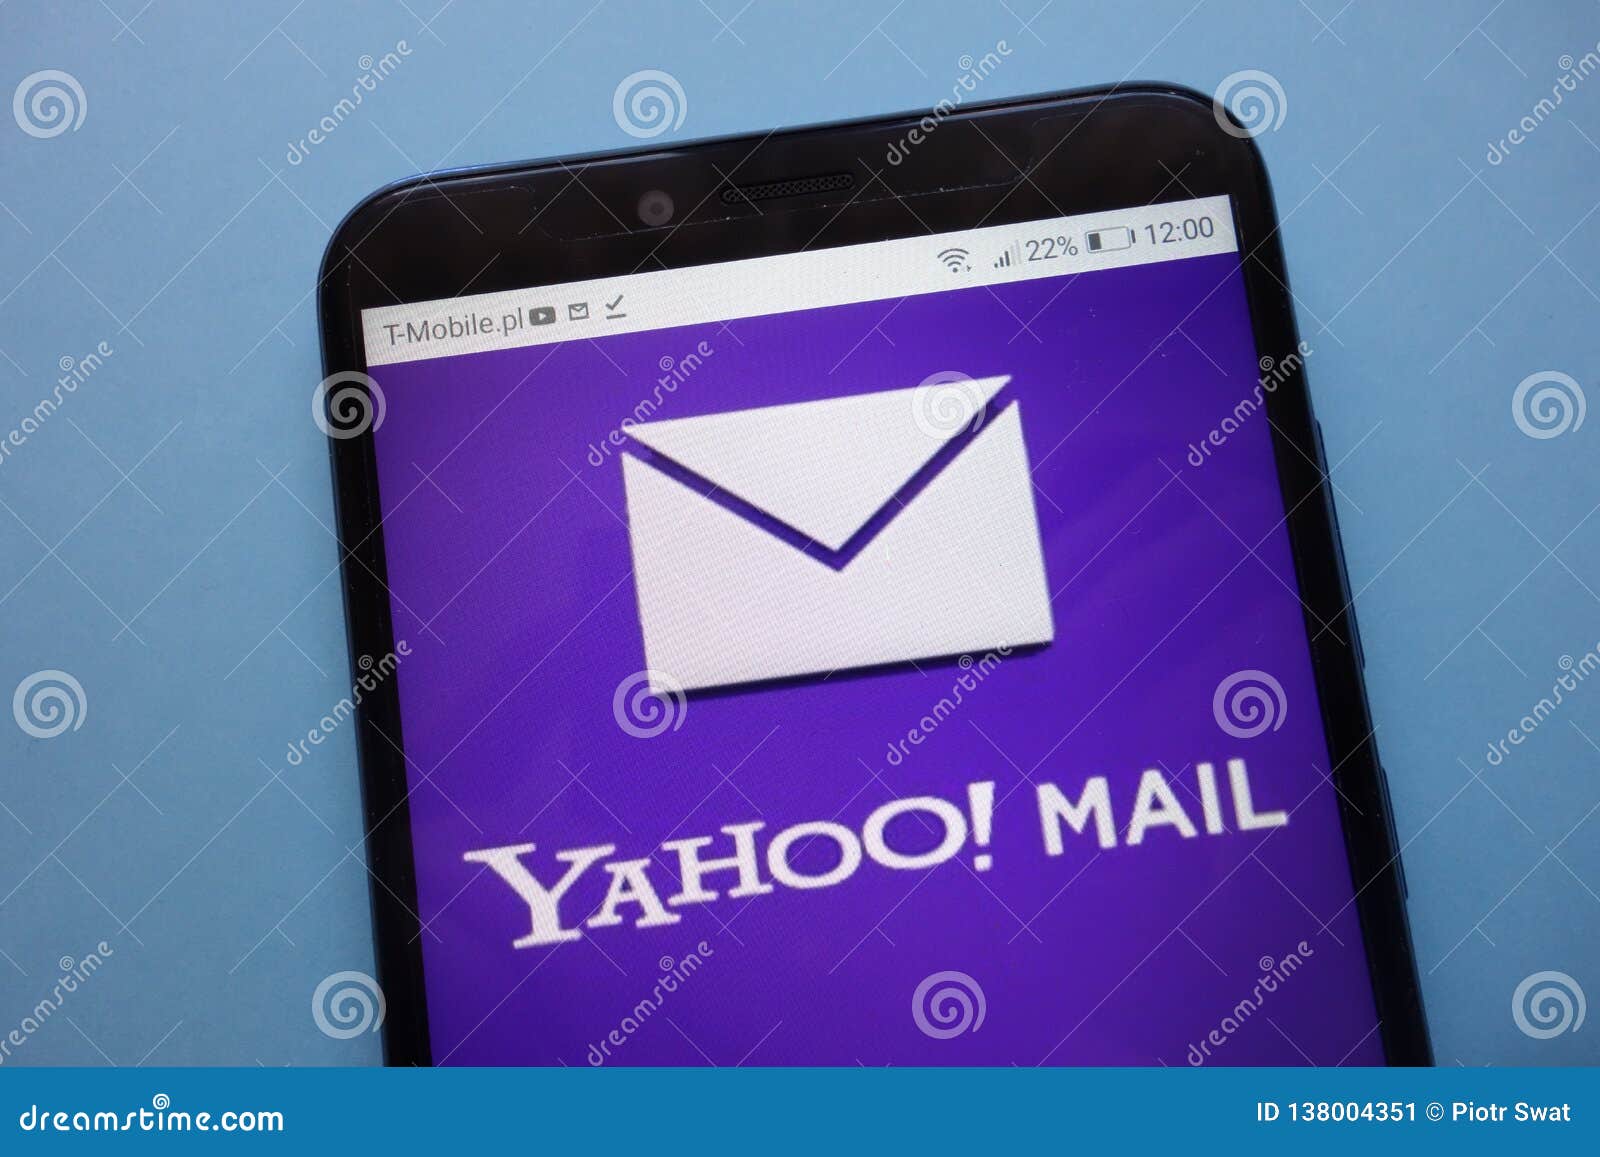 Yahoo Mail Logo Displayed On Smartphone Editorial Photo Image